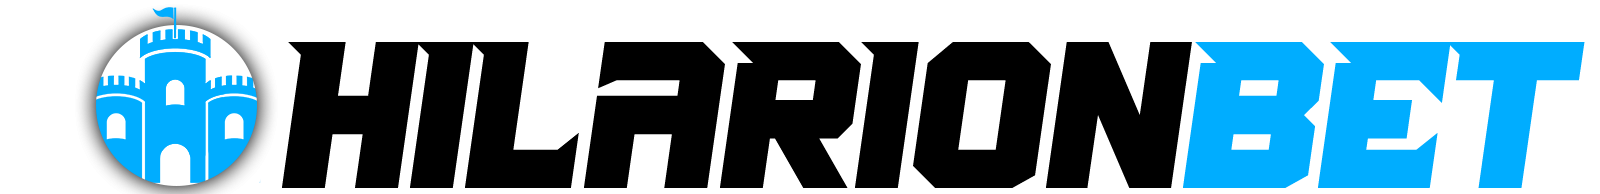 HilarionBet-Logo